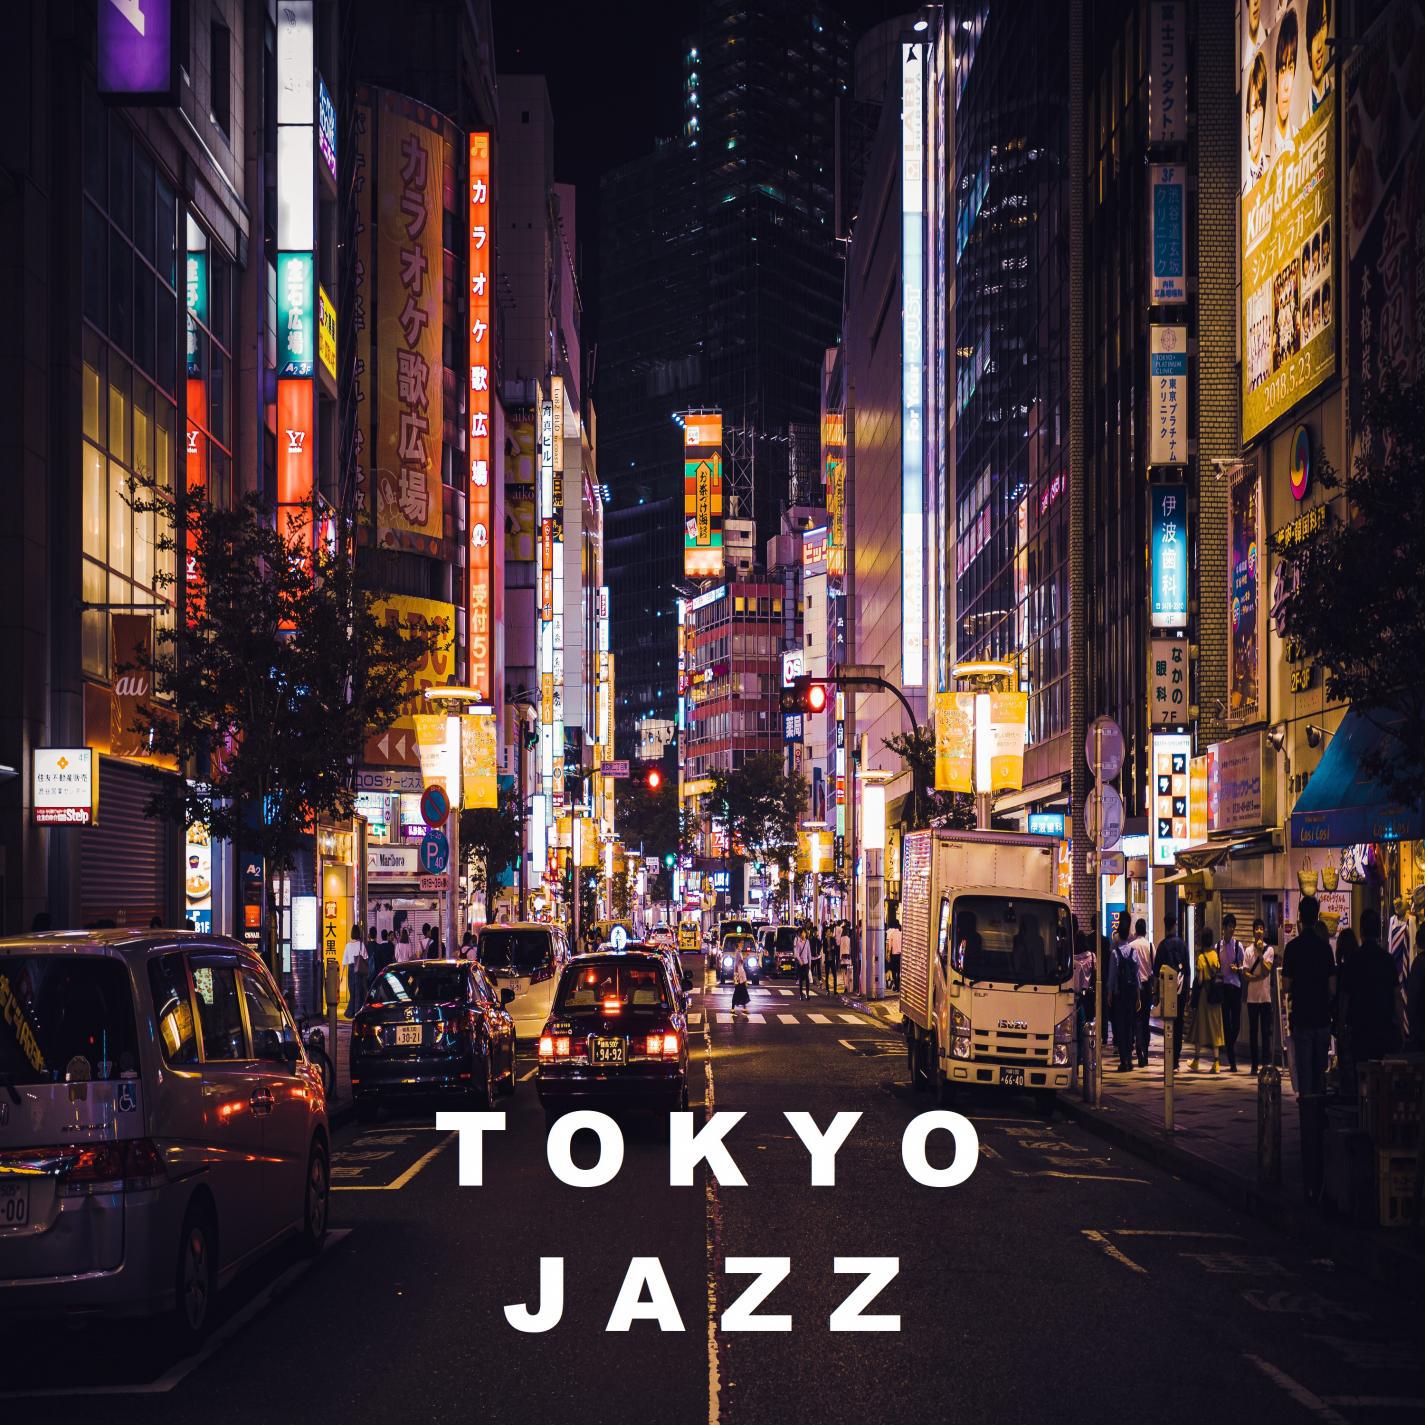 Jazz in Japan is Just Japanese Jazz